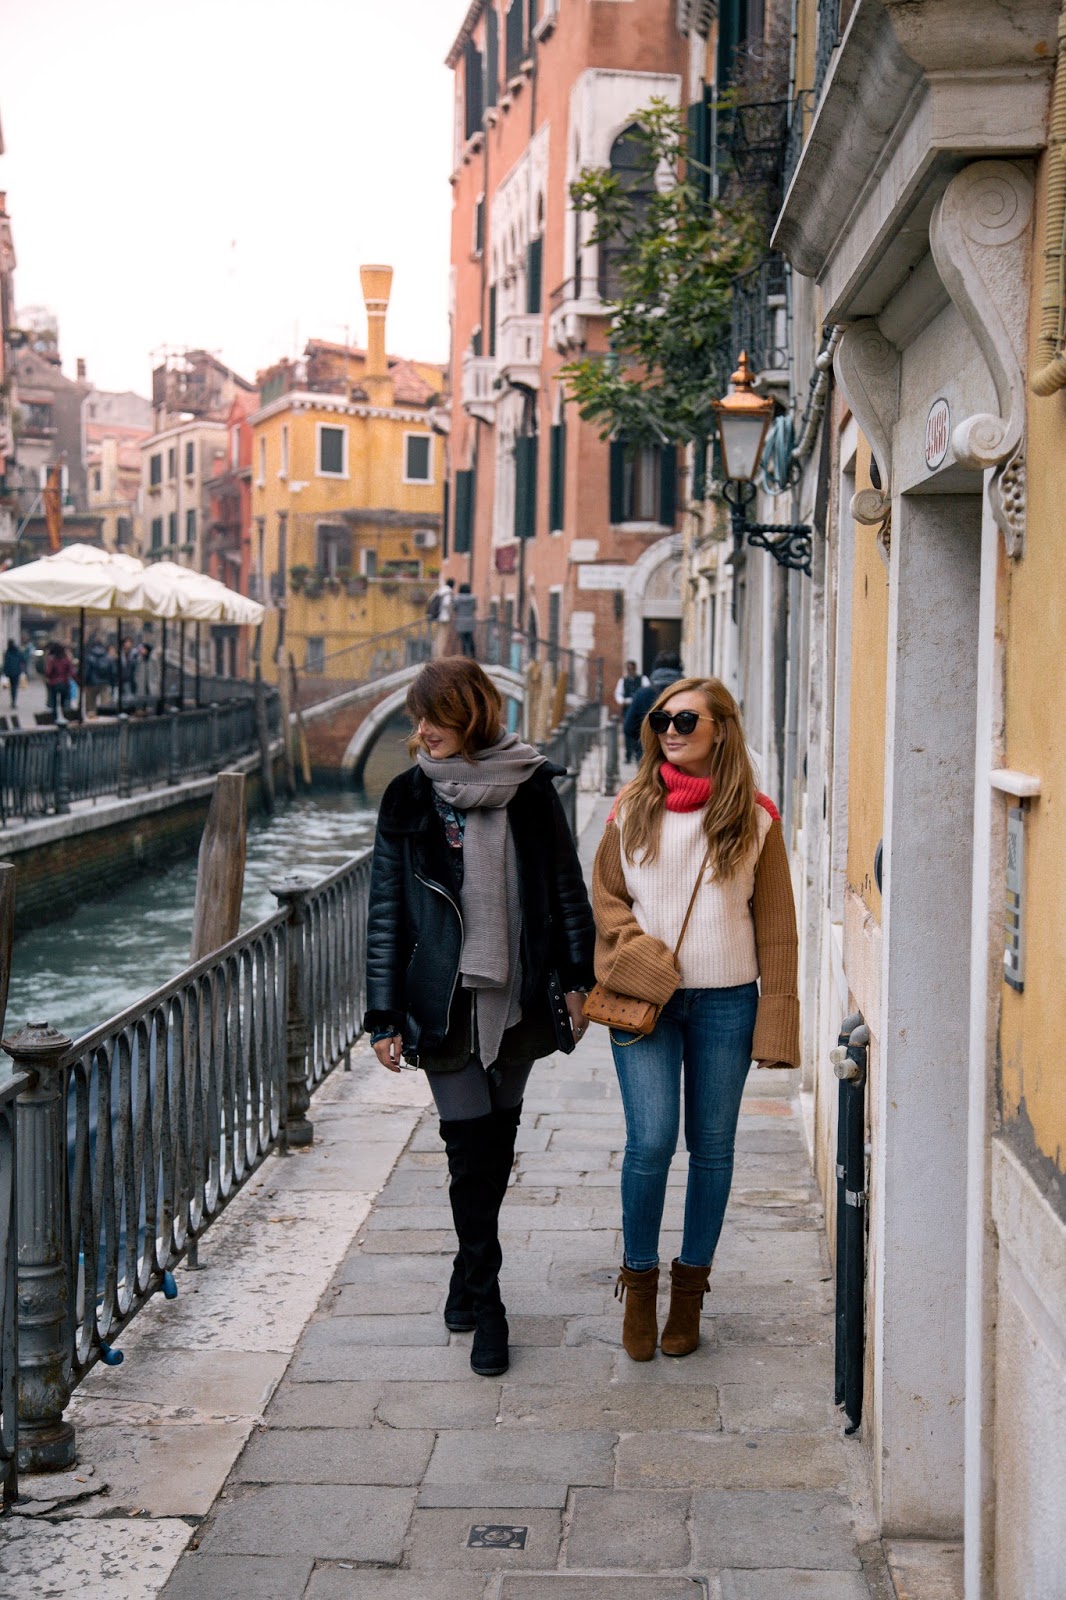 Venedig-blogger-in-venedig-winterlook-winter-outfit-creme-farbene-jacke-creme-felljacke-pelzjacke-braune-wildleder-stiefeletten-rolli